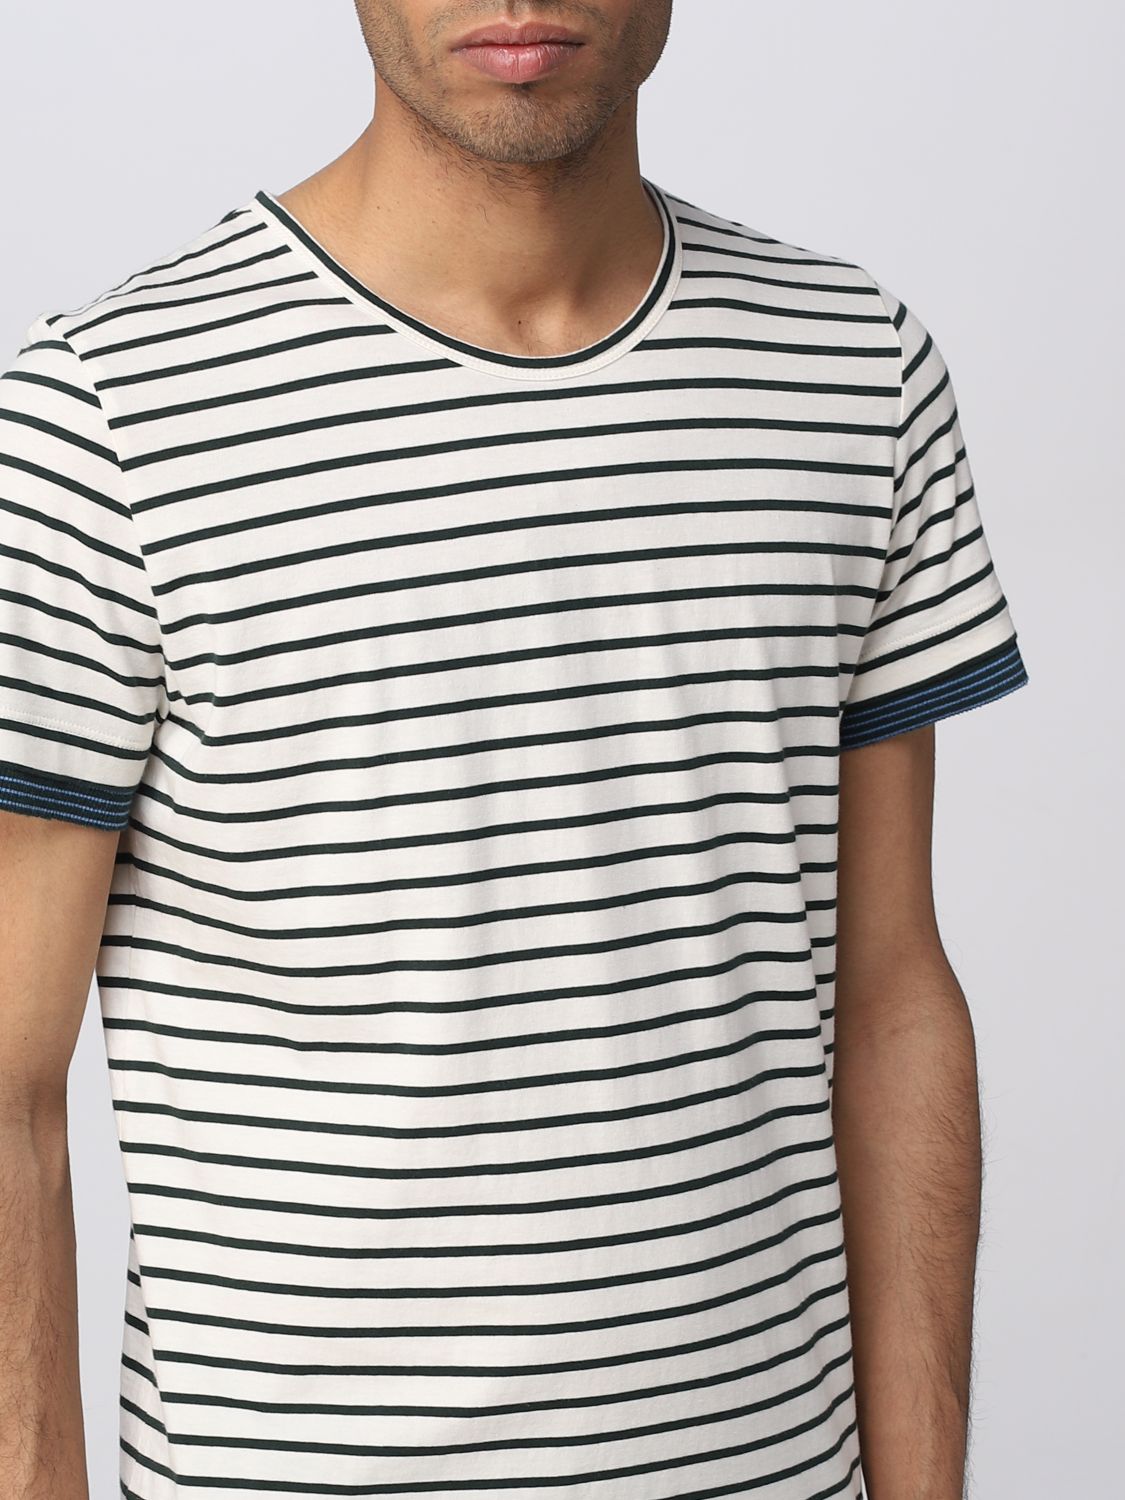 MM6 Maison Margiela Striped T-Shirt